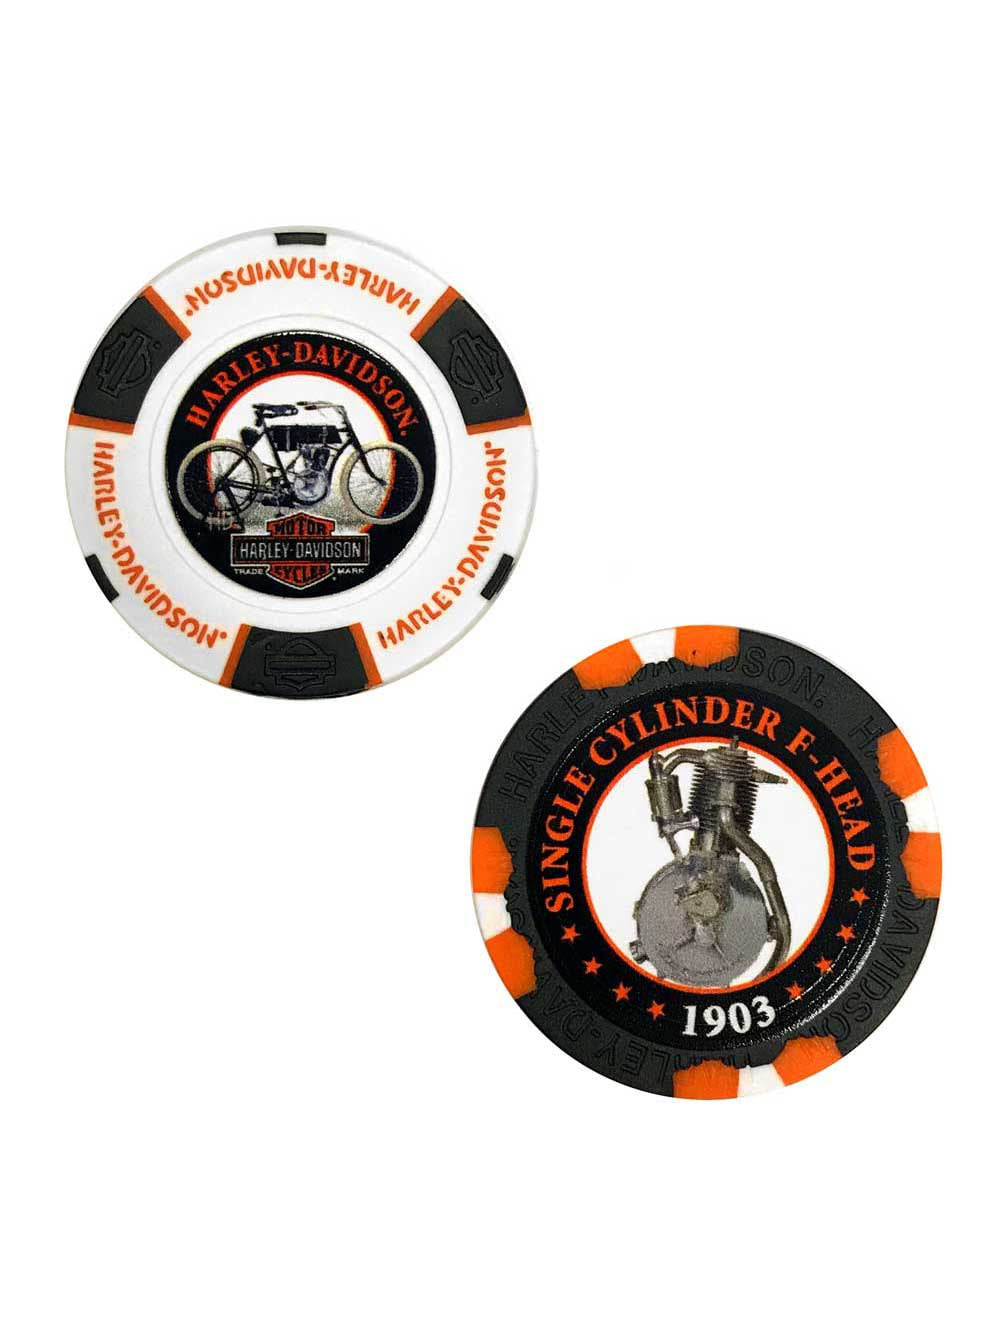 Red/Black Harley Davidson Poker Chip CLOSED Details about   OCALA HD ~ FLORIDA ~ 